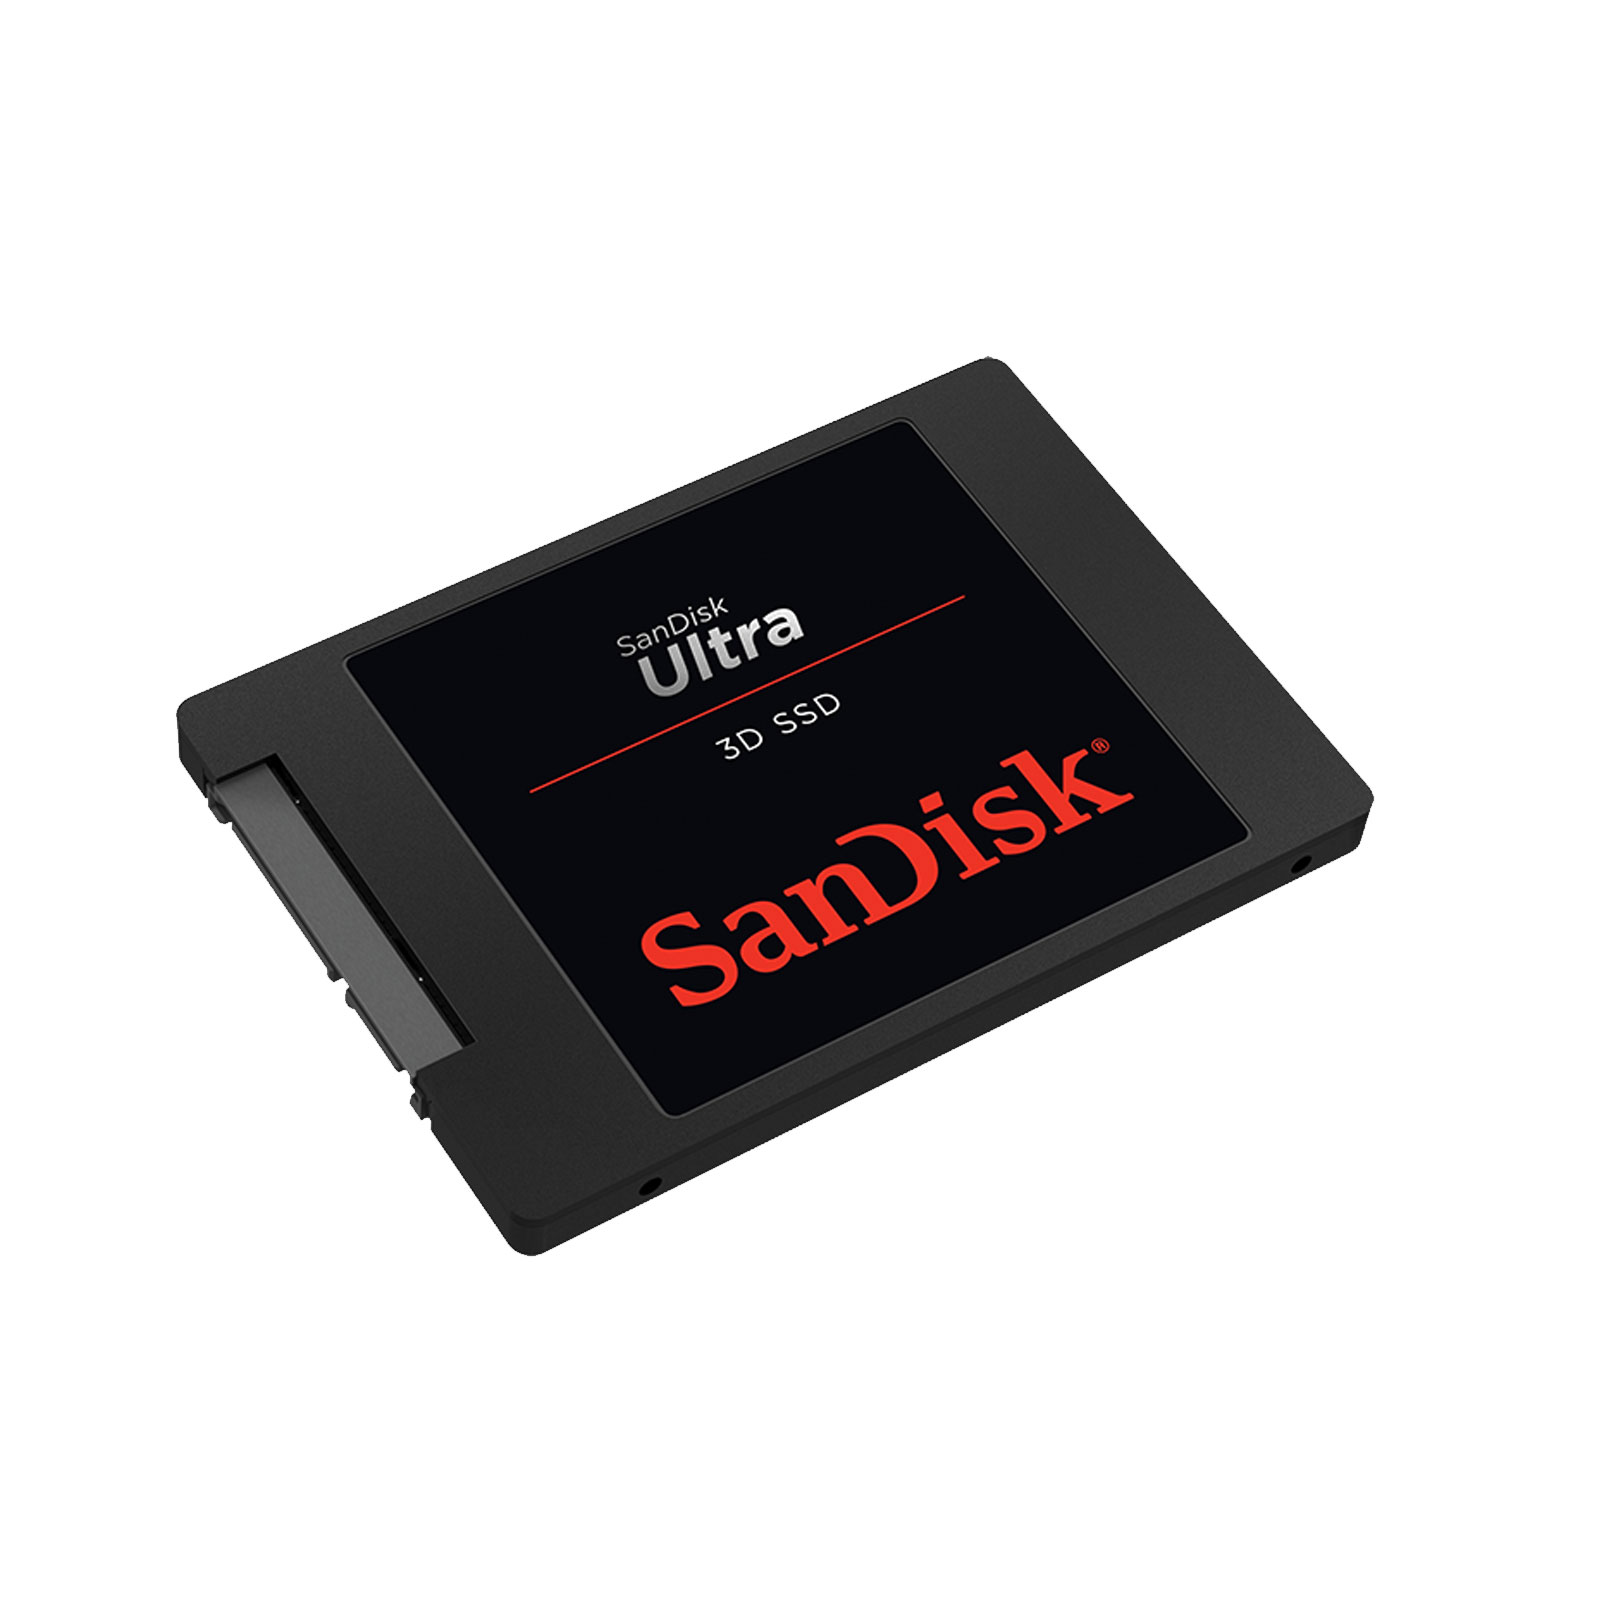 SanDisk Ultra 3D SSD 2TB Interne SSD-Festplatte